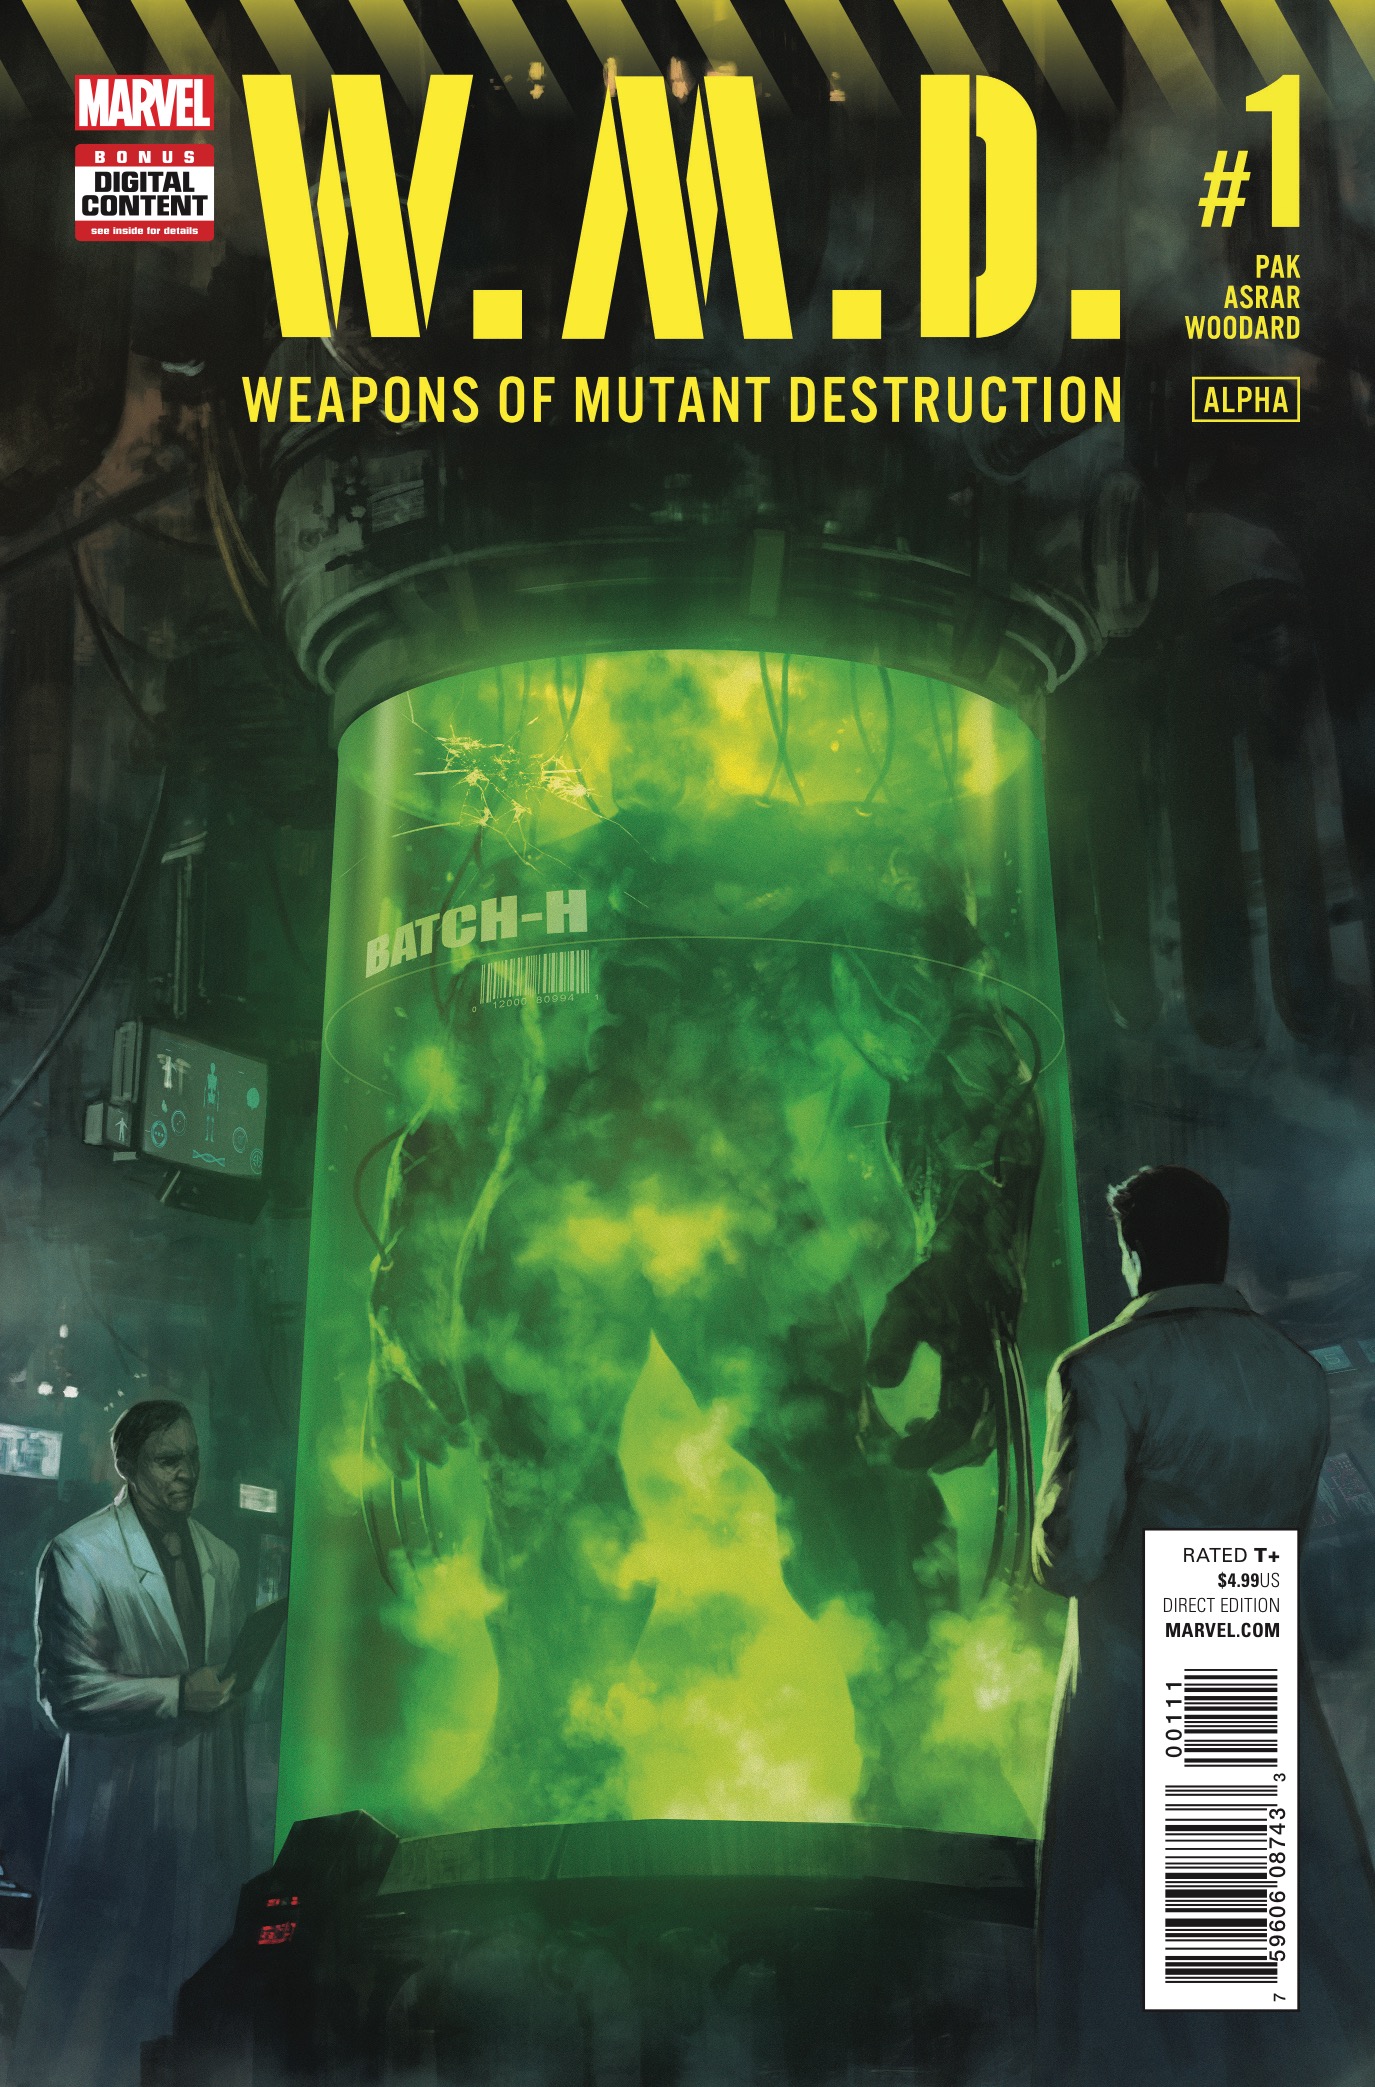 Weapons of Mutant Destruction #1 Review